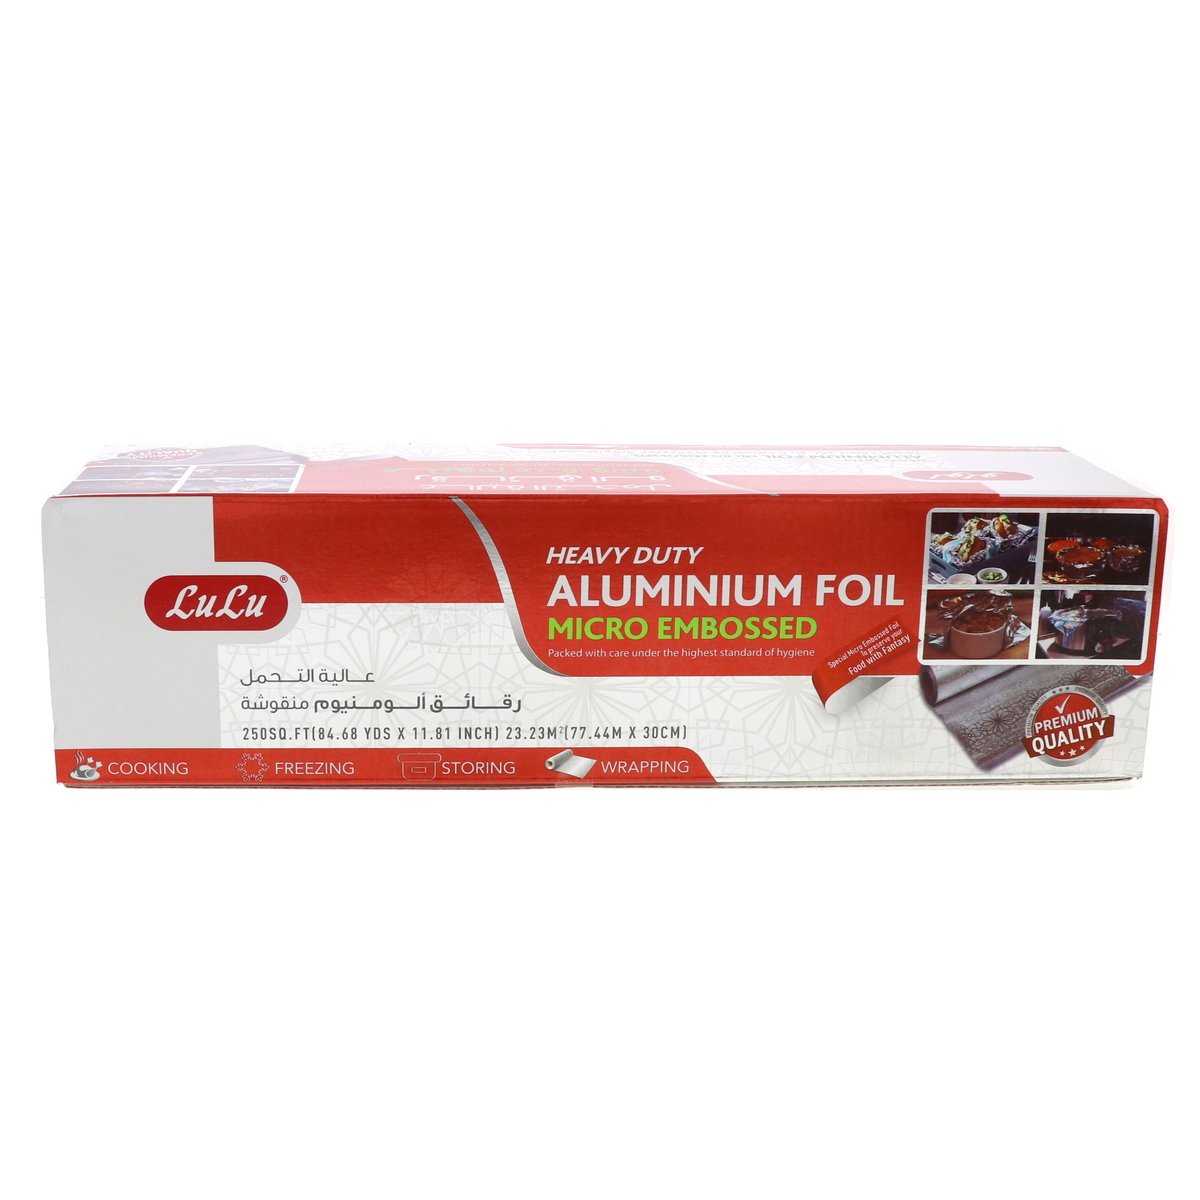 LuLu Heavy Duty Aluminium Foil Micro Embossed Size 77.44m x 30cm 250sq.ft 1pc